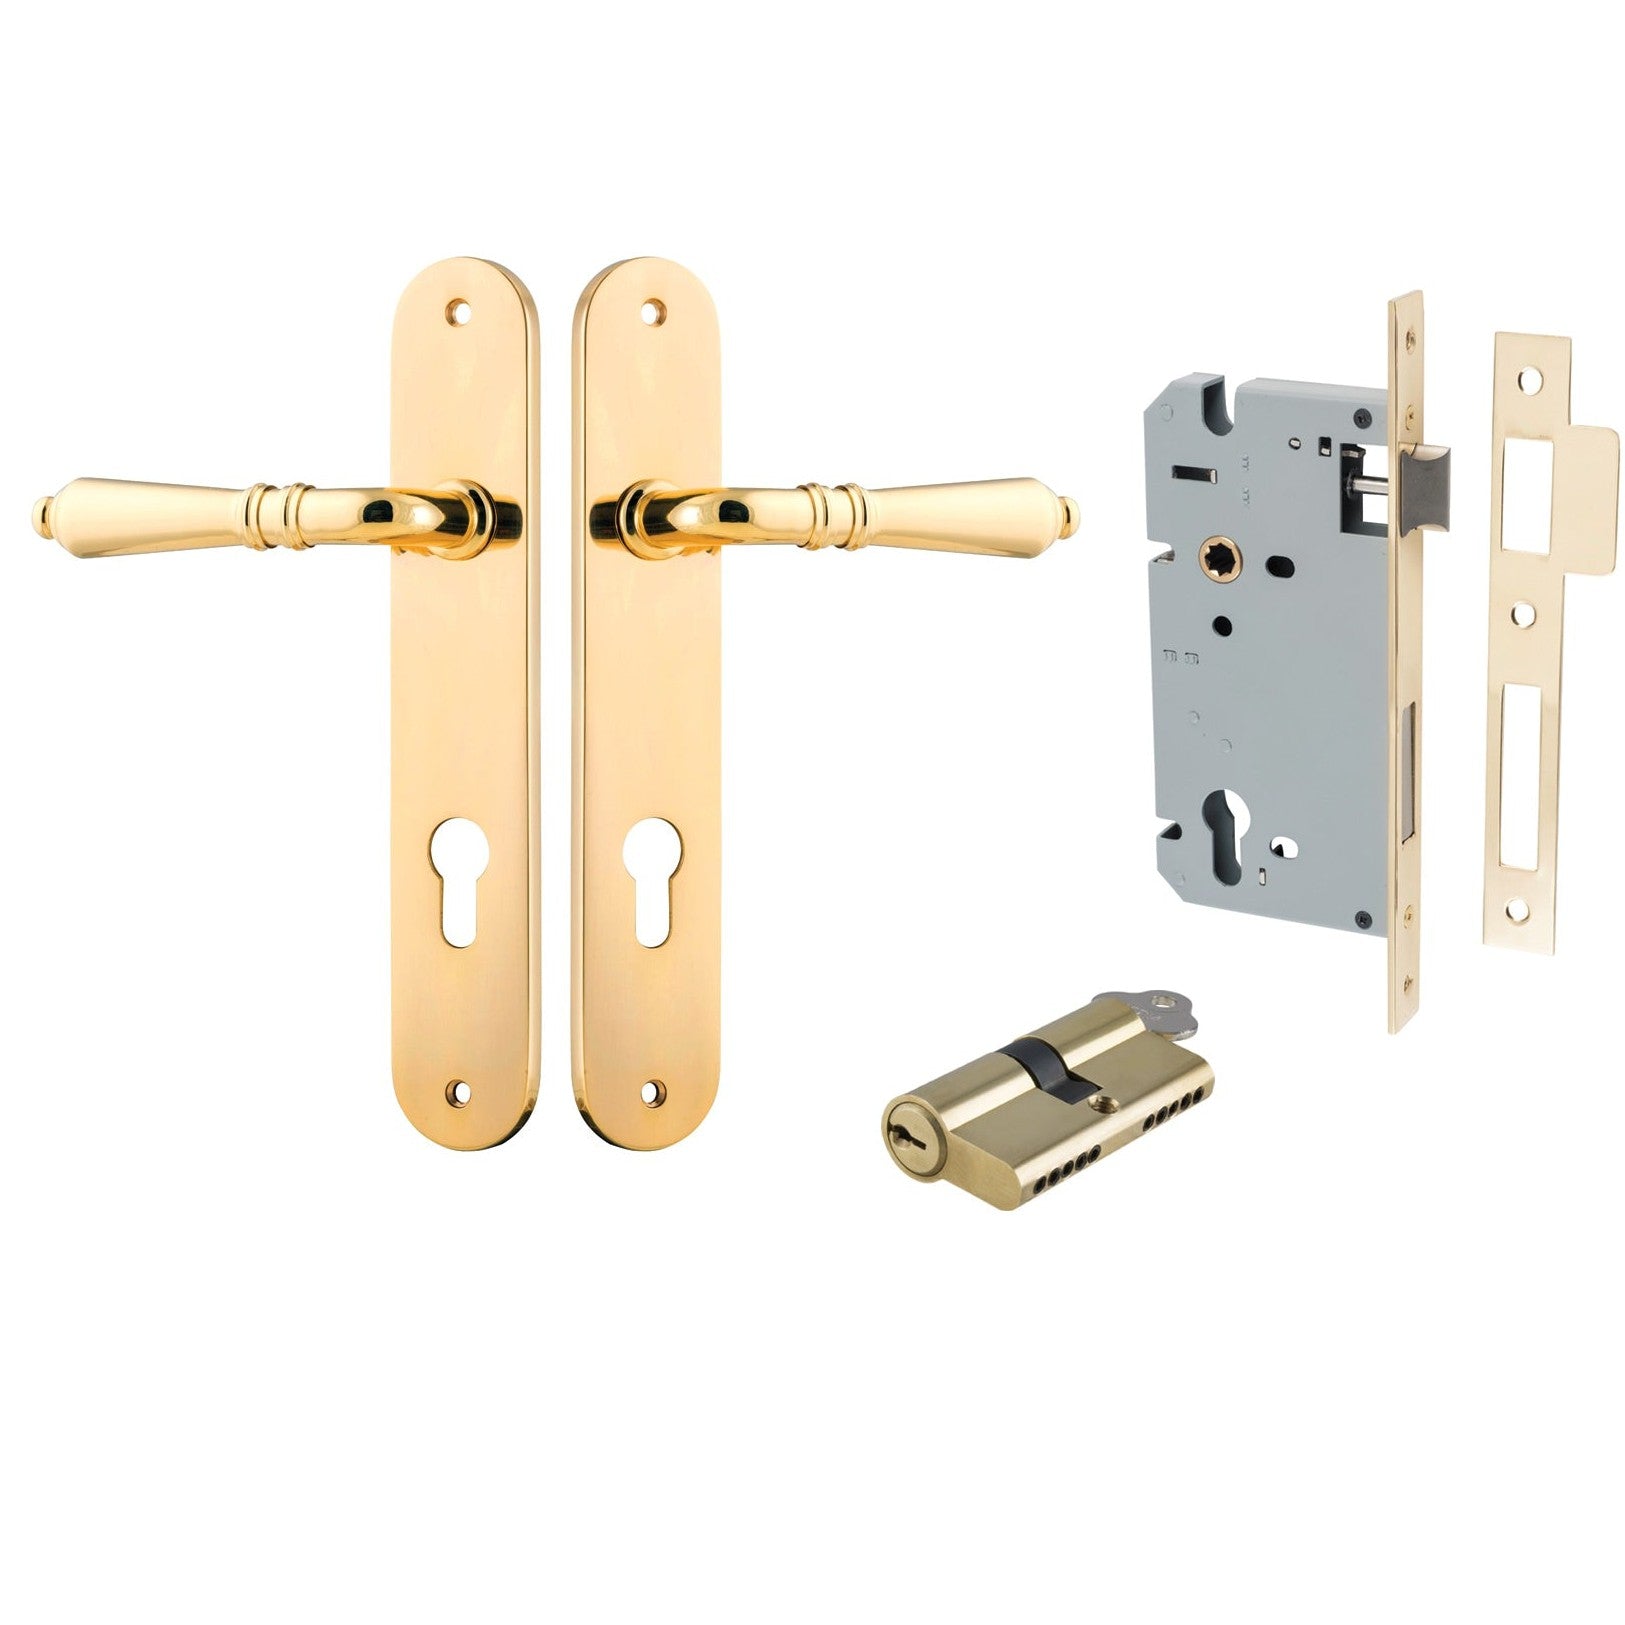 Iver Door Handle Sarlat Oval Euro Key/Key Polished Brass Entrance Kit